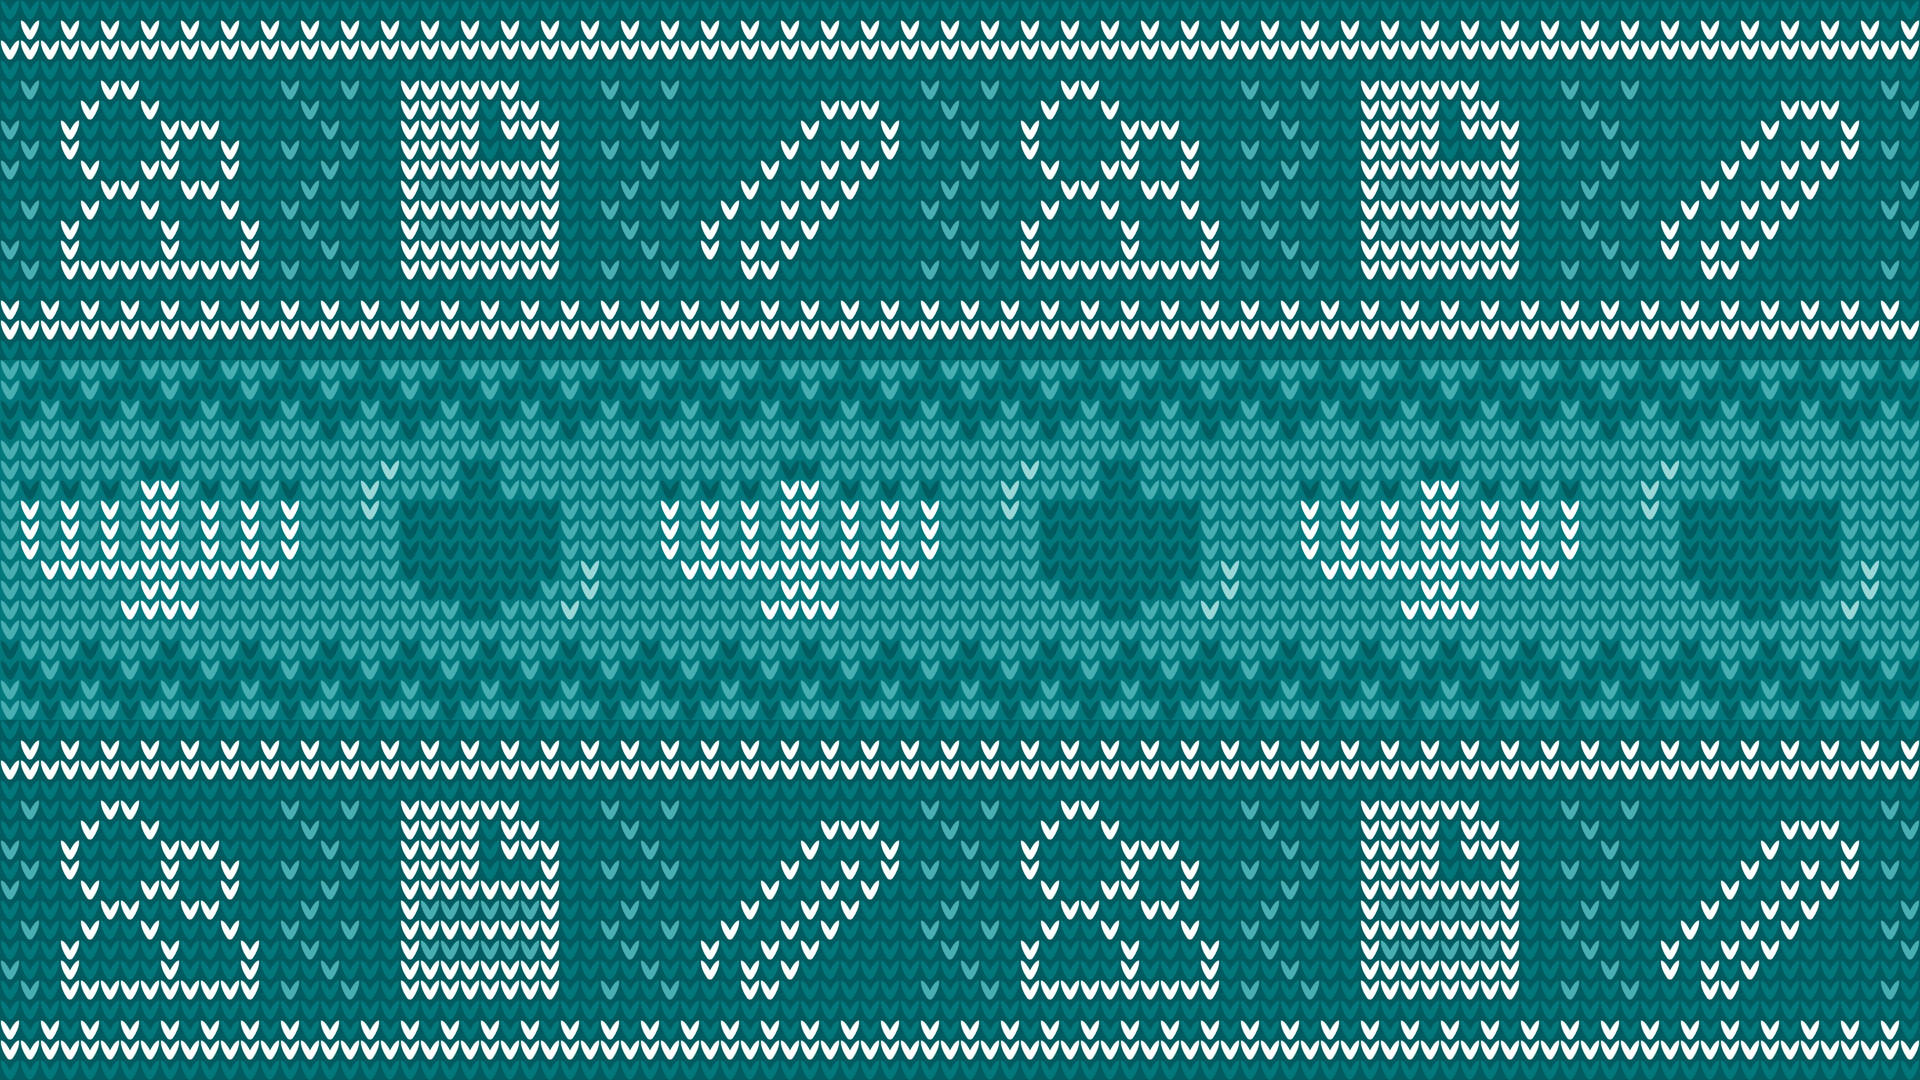 Hanukkah Sweater Pattern Art Wallpaper